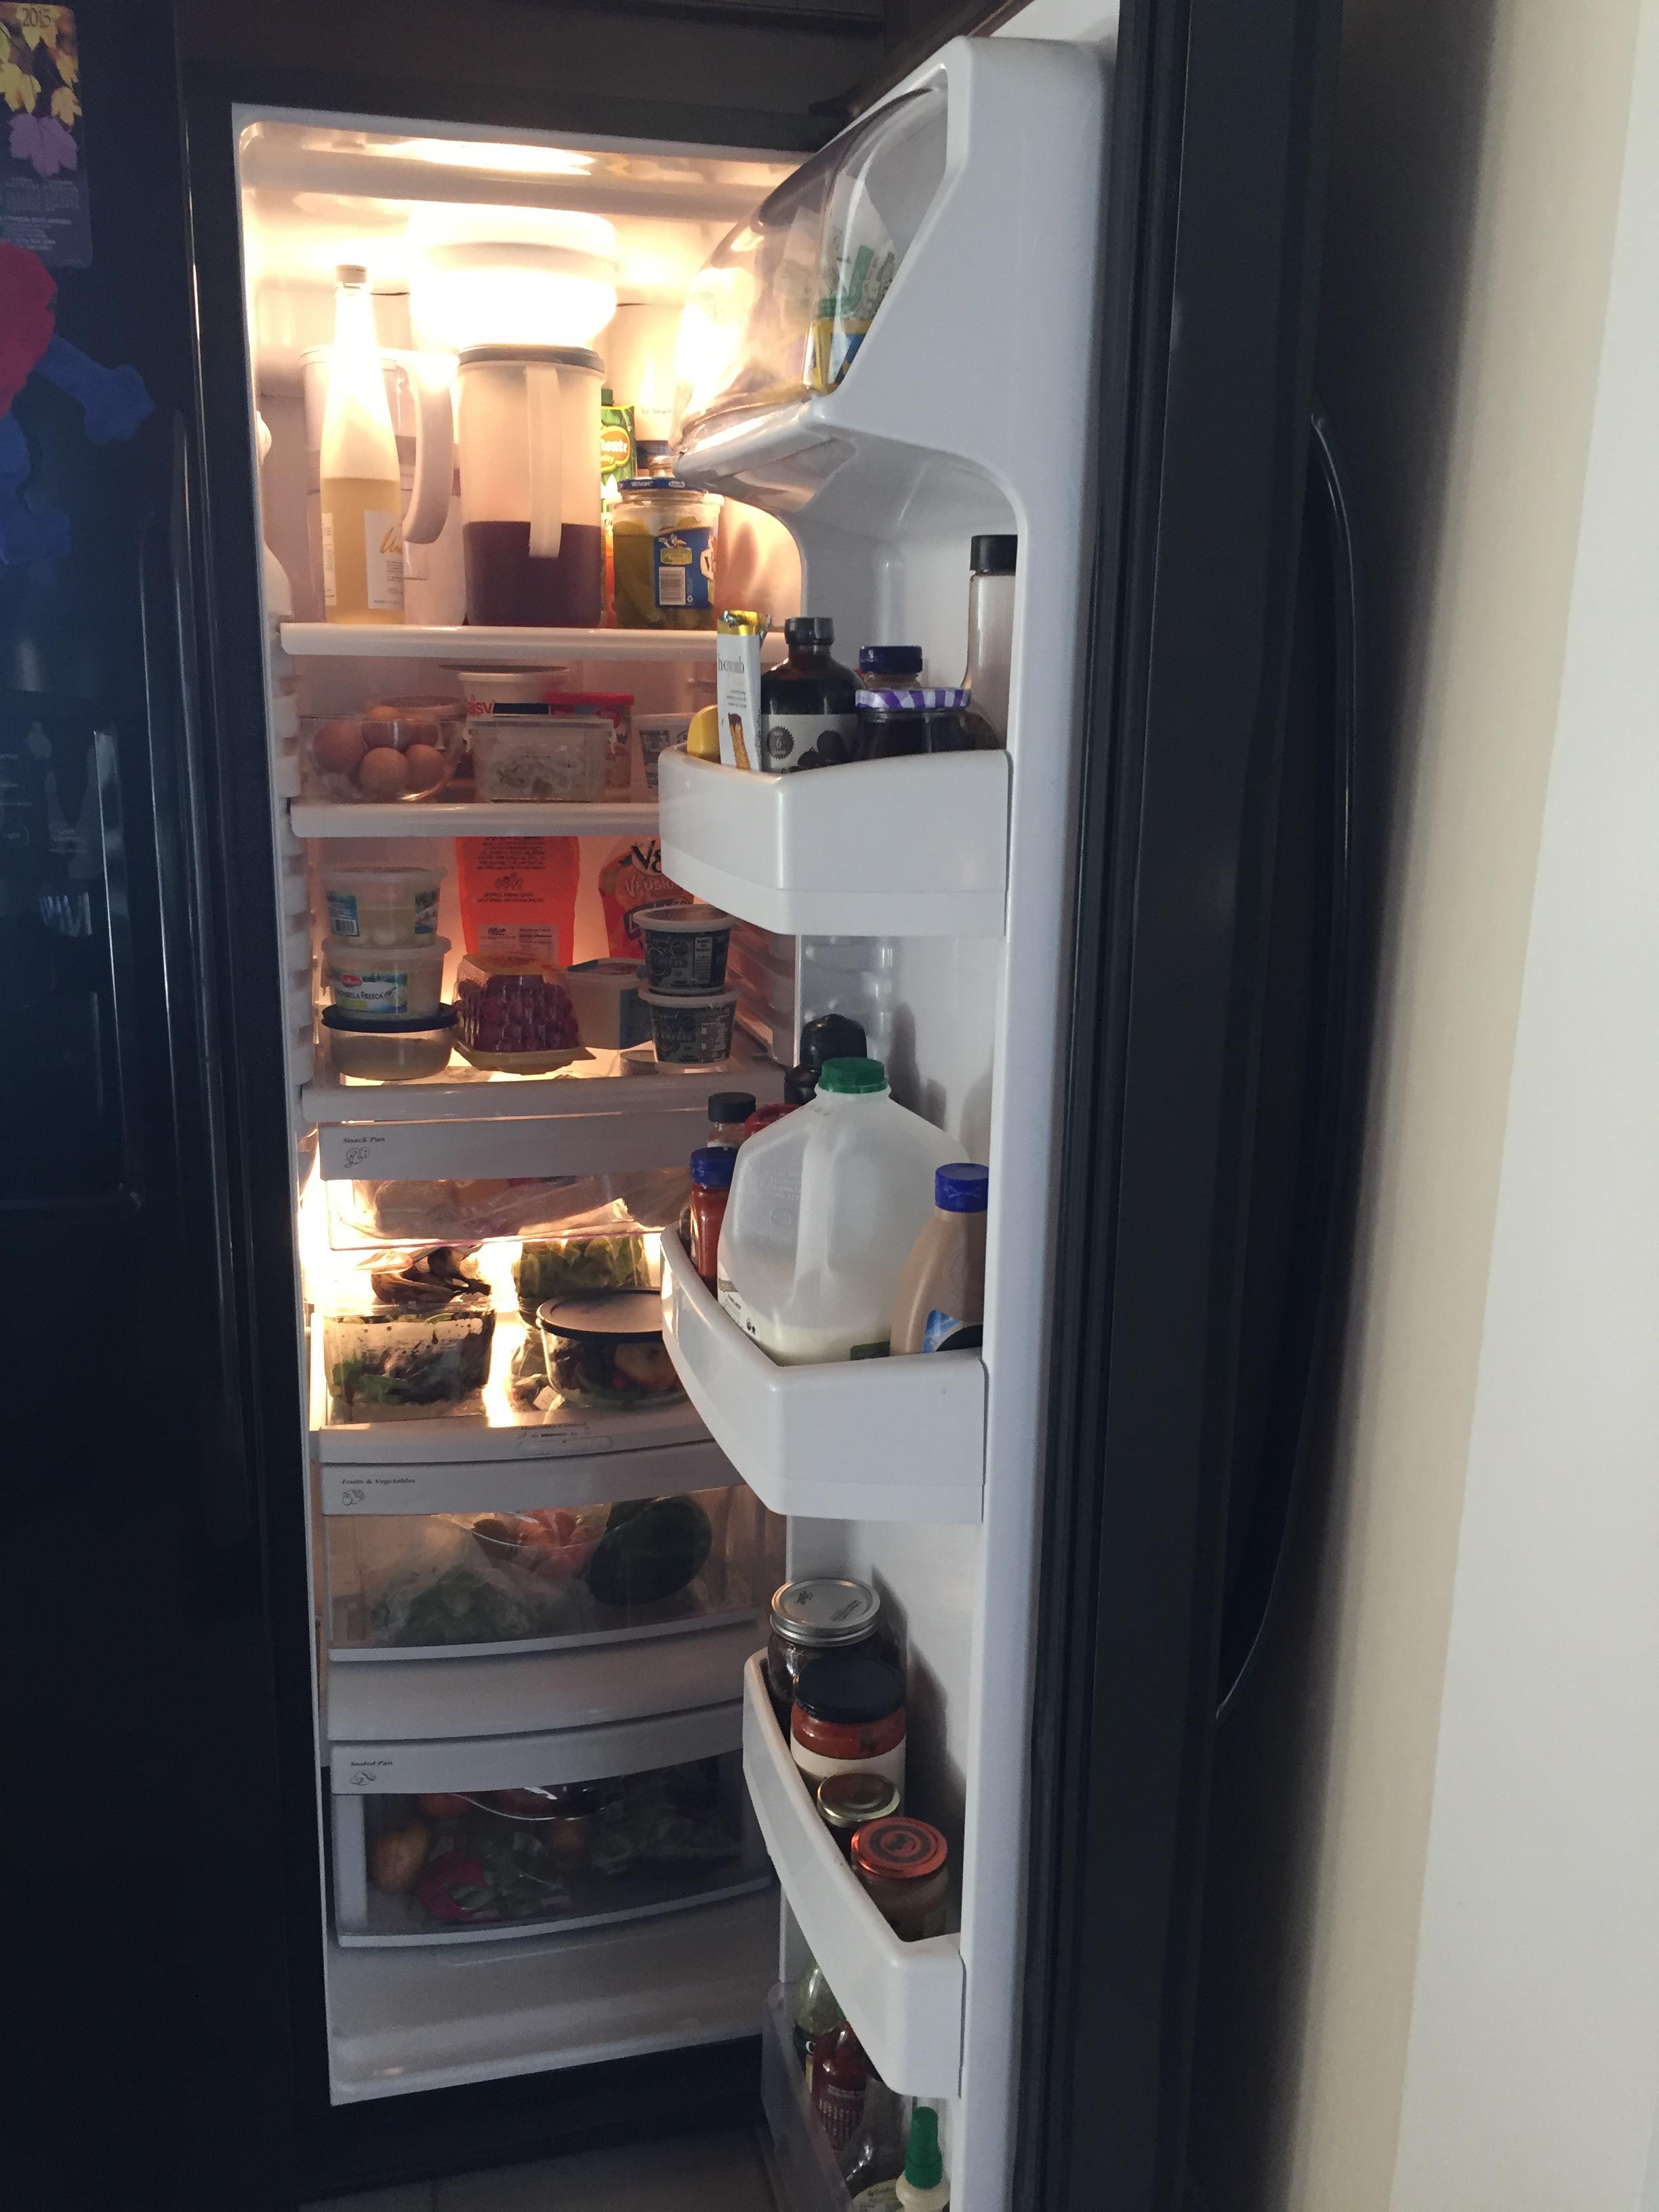 Nice fridge, poor fit